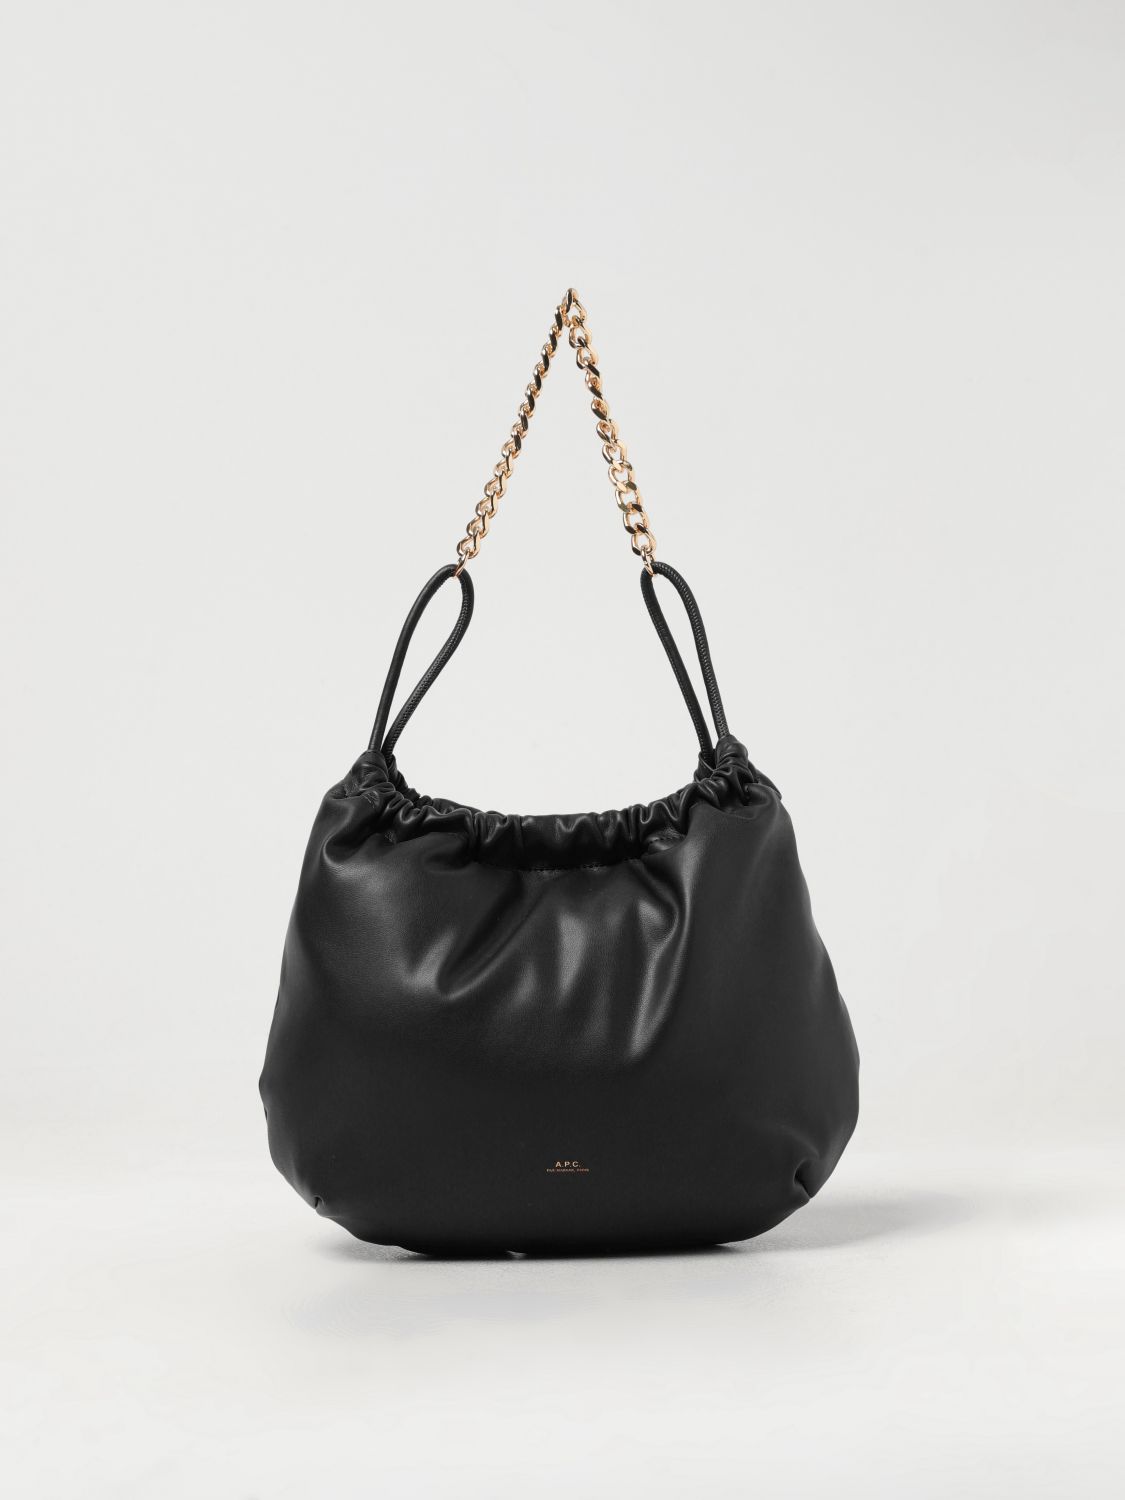 Apc Handbag A.p.c. Woman Colour Black